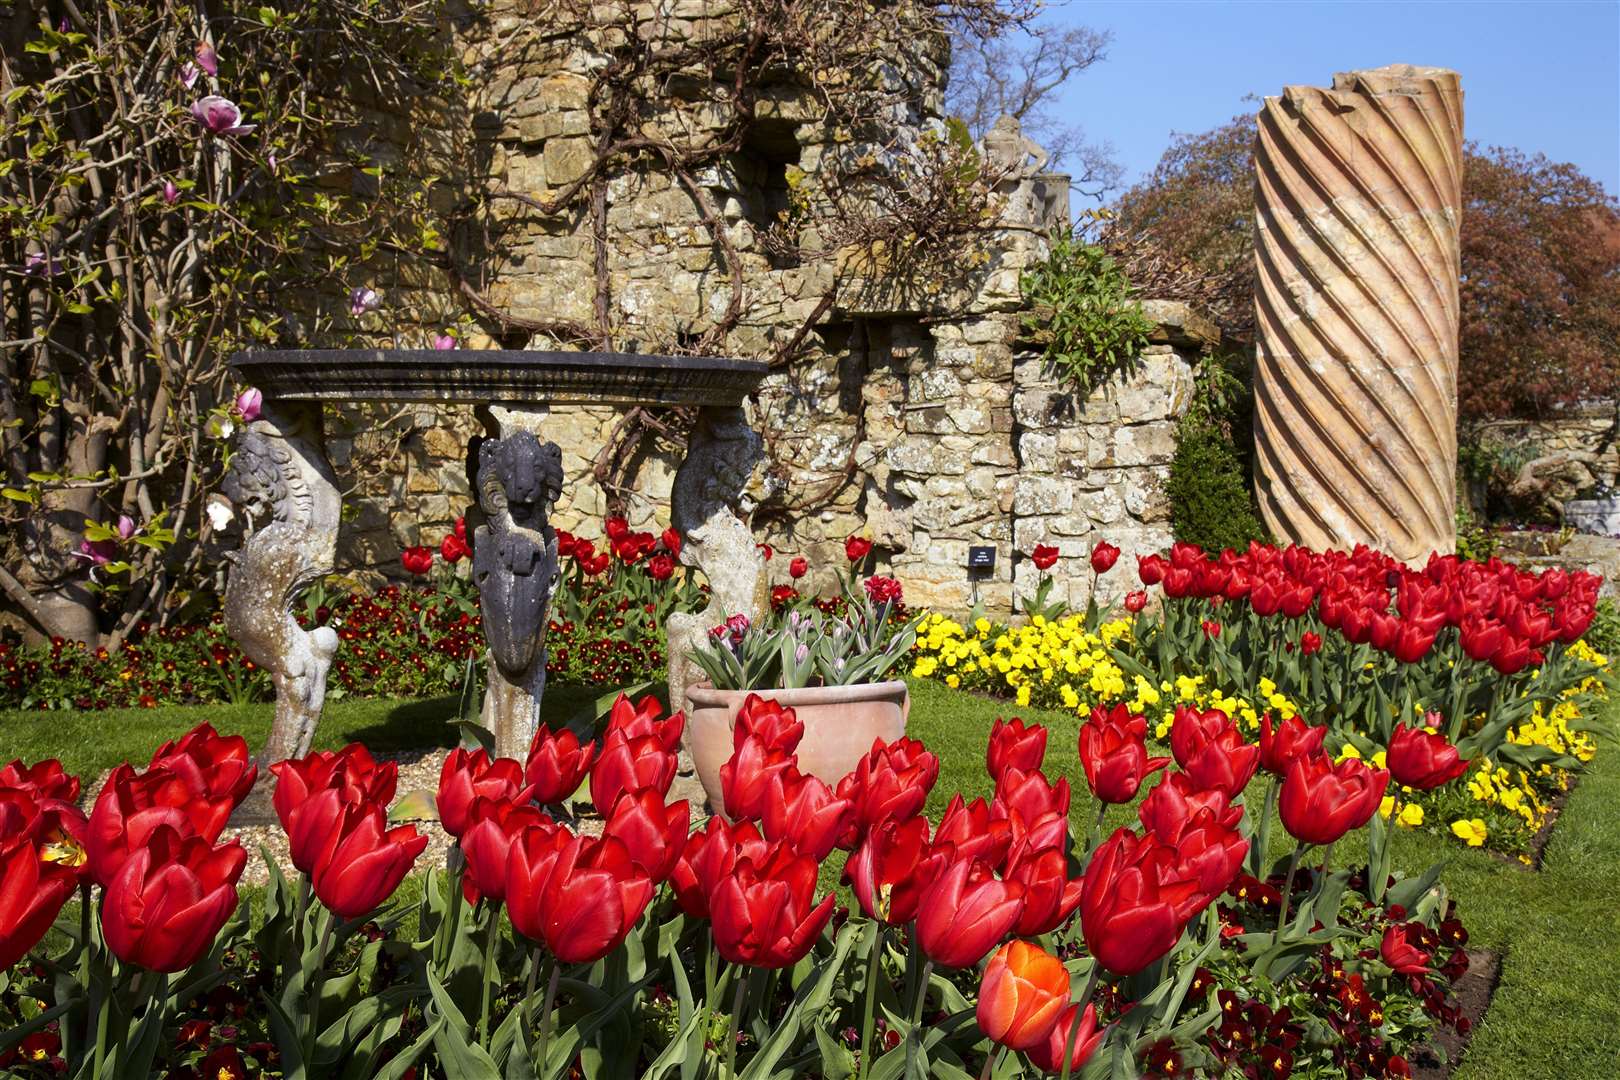 Tulips in the Italian Garden at Hever Castle (16539098)